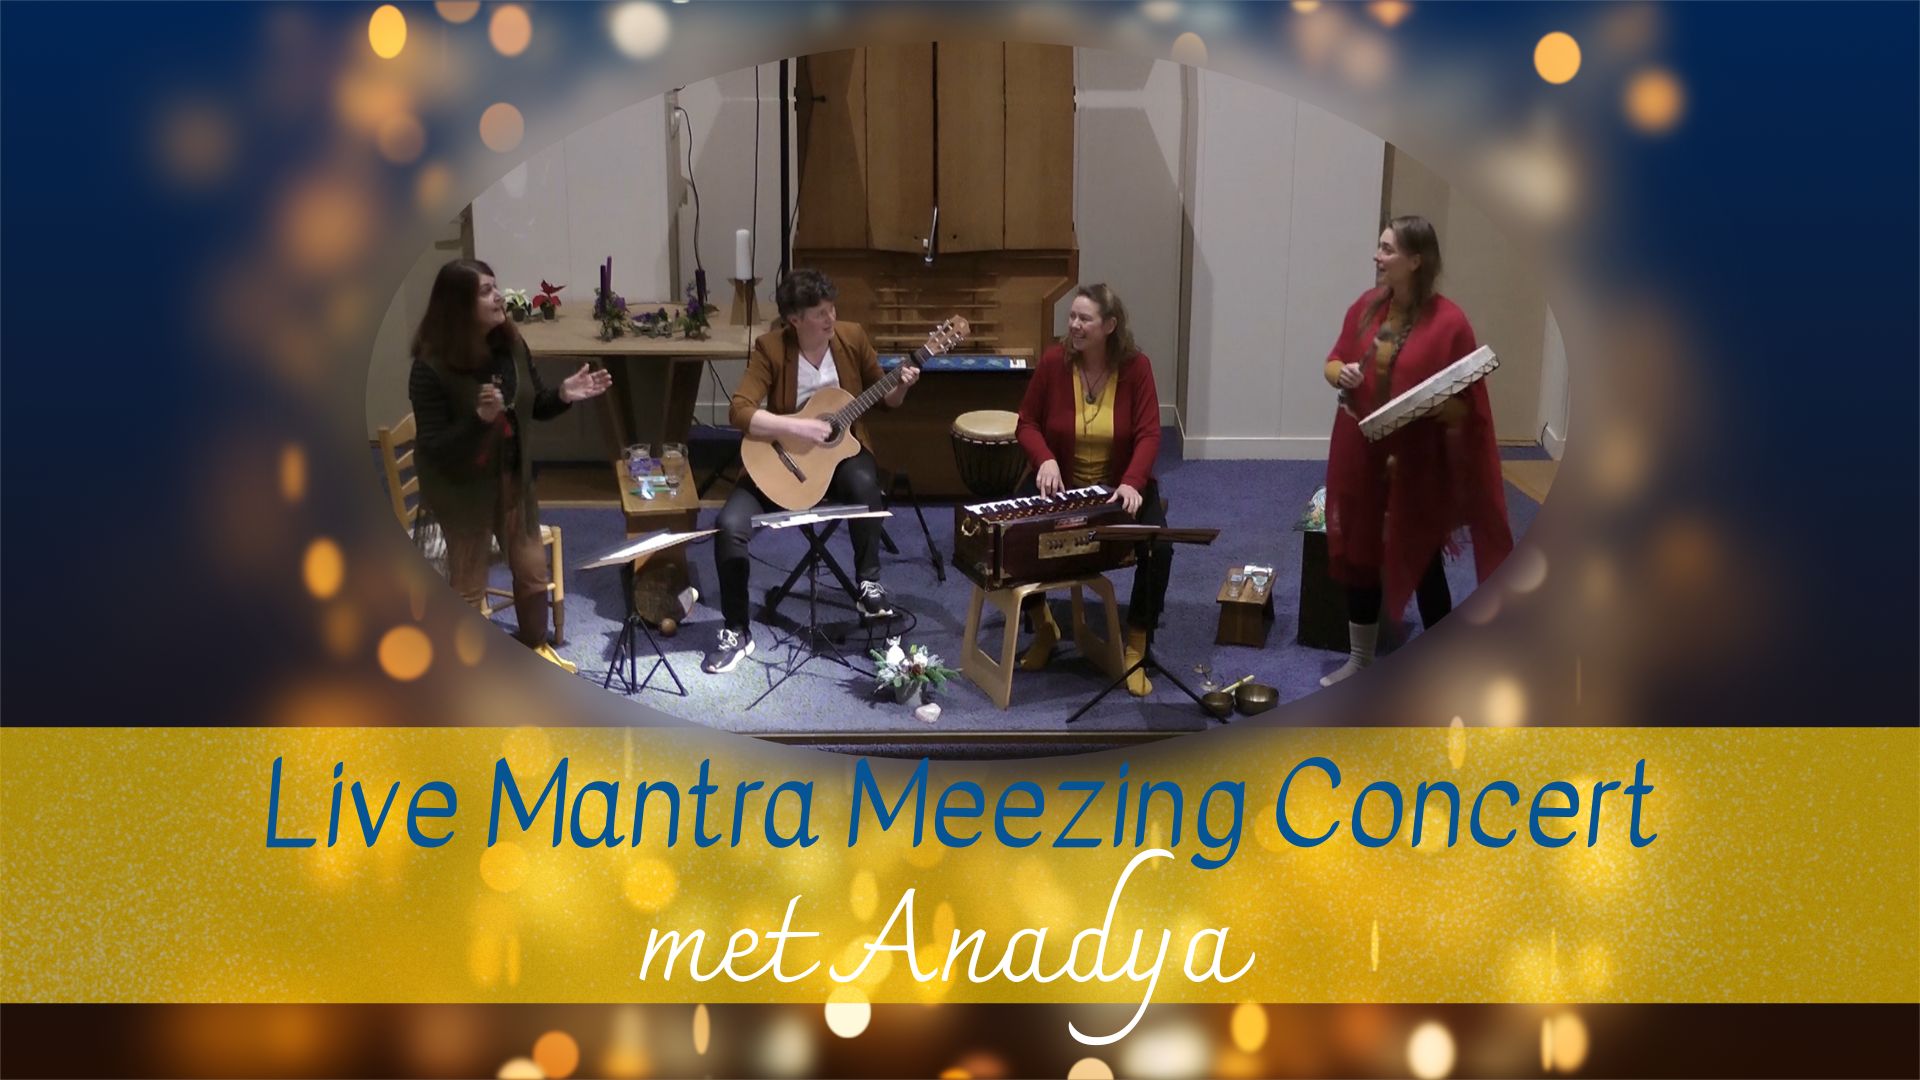 Mantra meezing concert